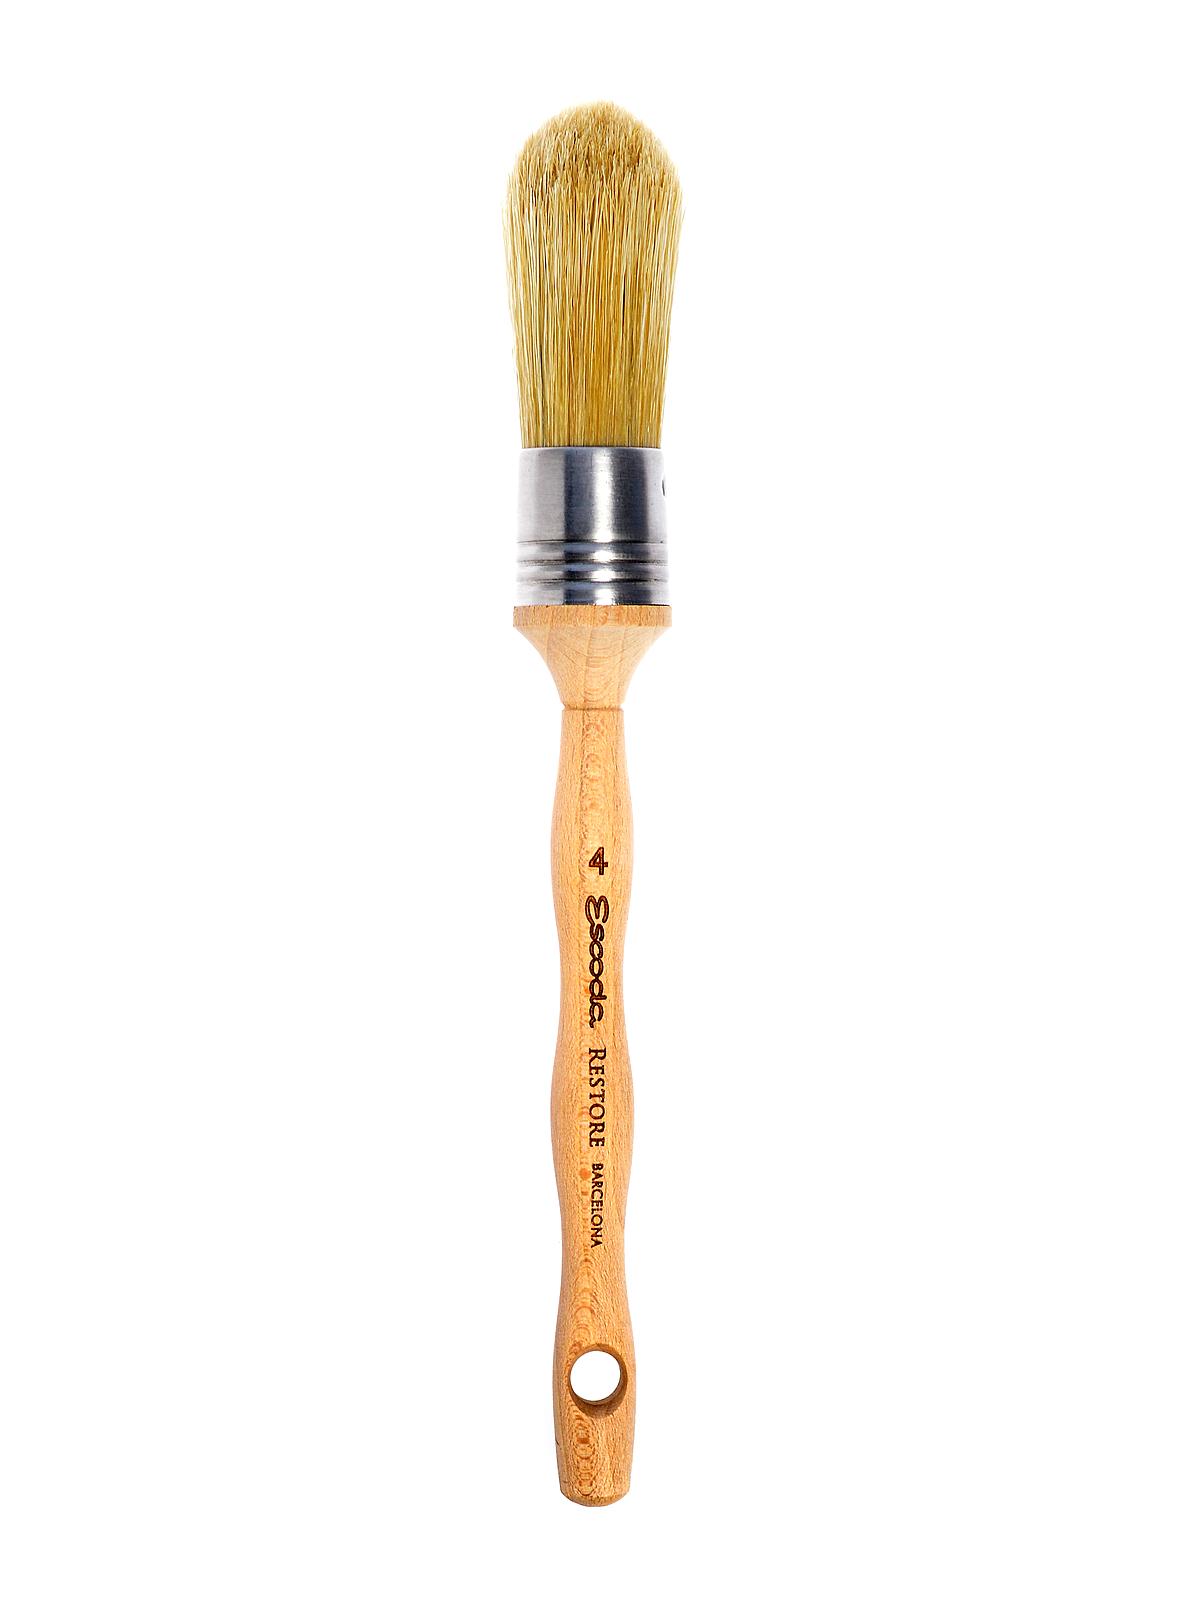 Restore Chalk Brushes 7501-4 Bristle Short Handle 4